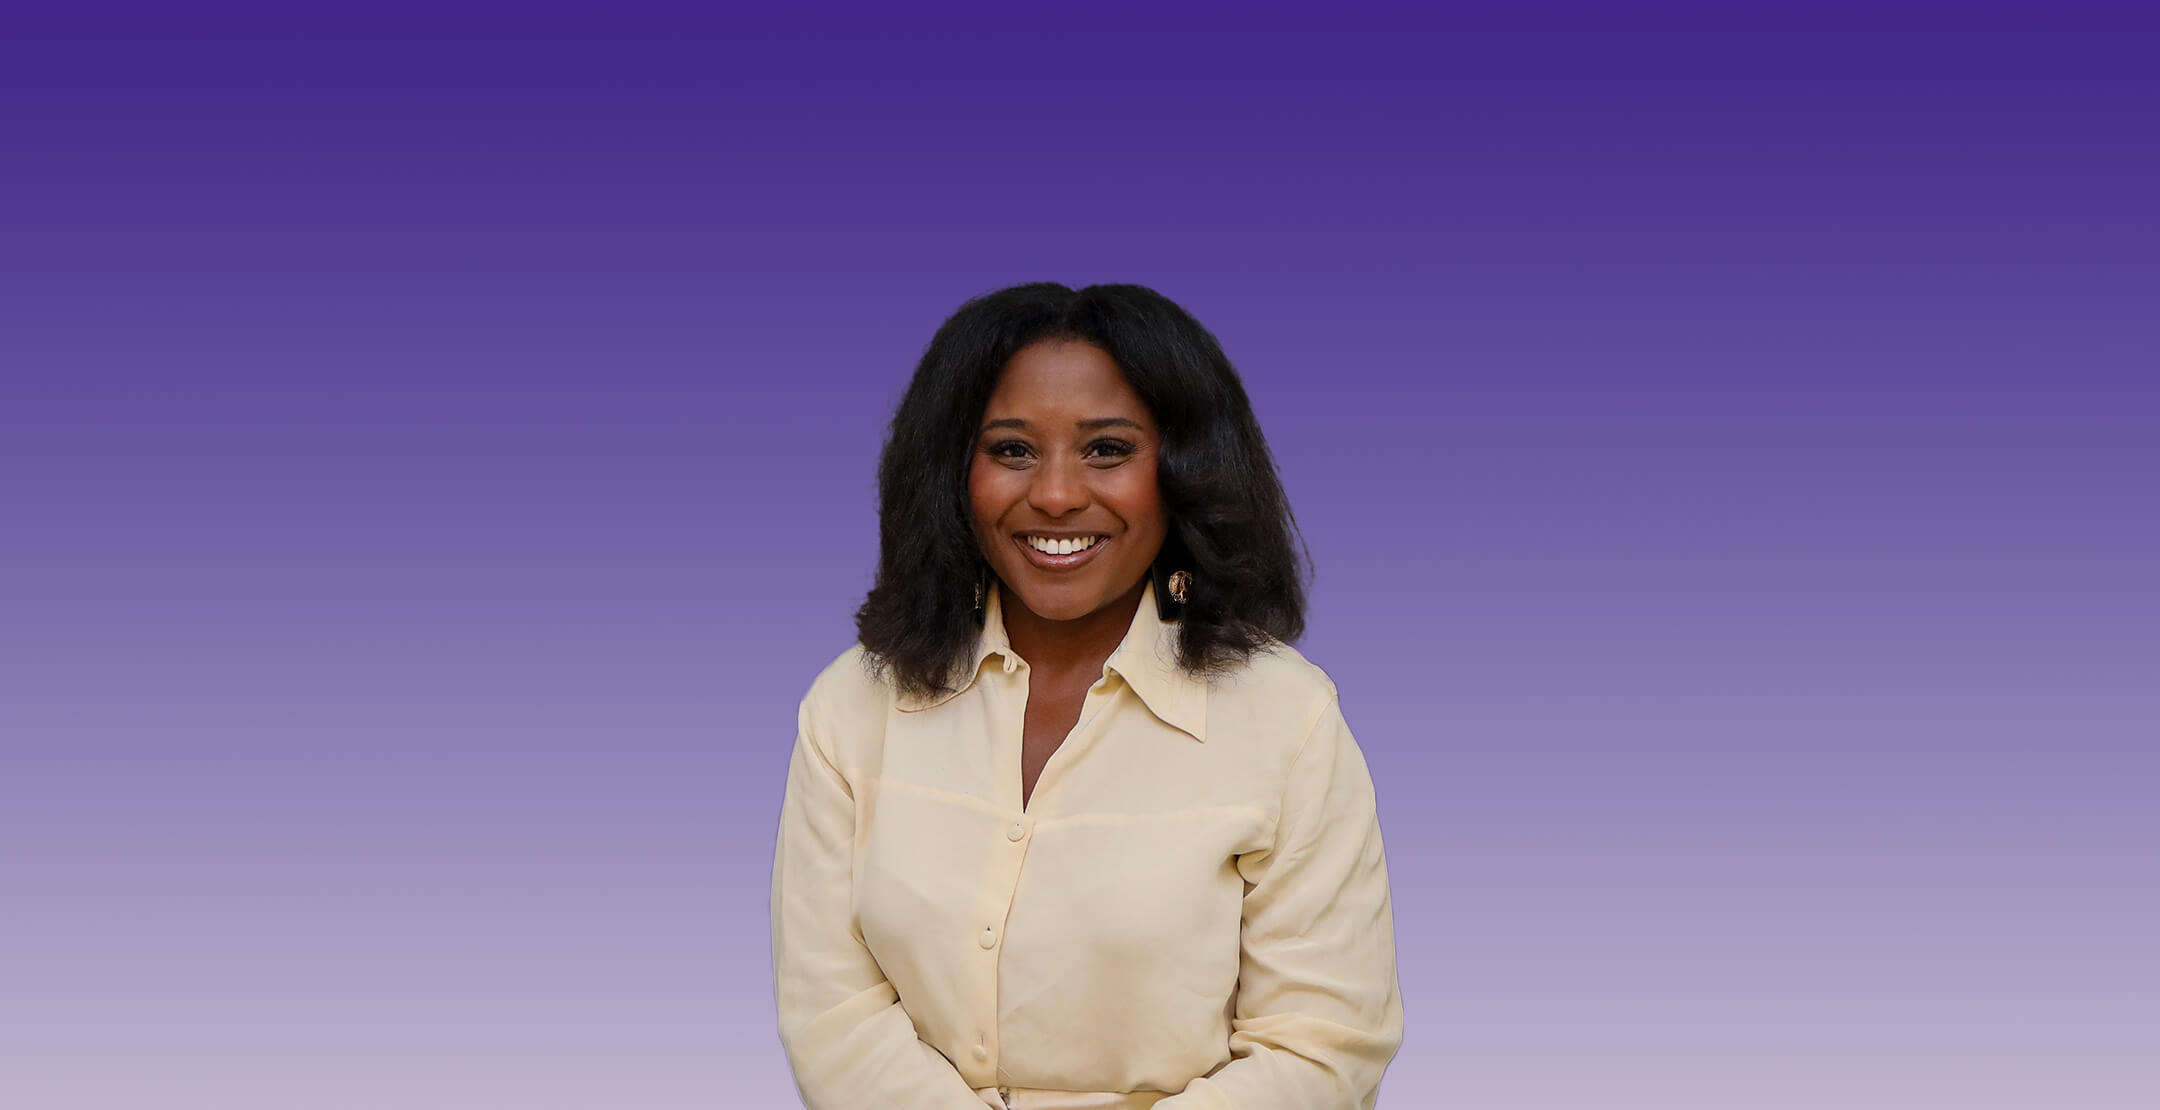 Dr. Jennifer Caldwell against a purple background